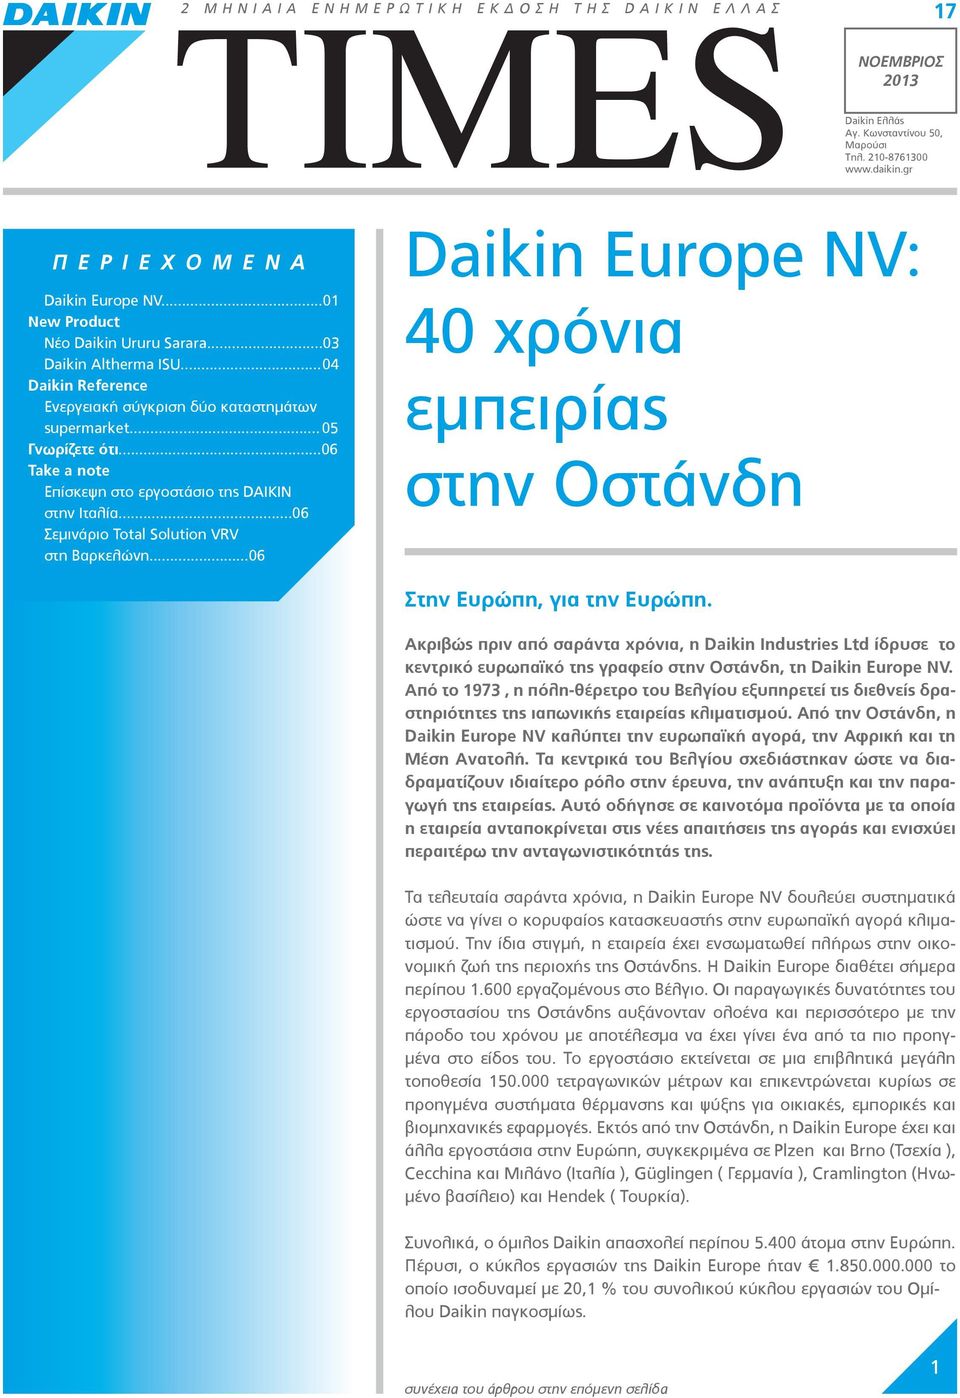 ..06 Take a note Επίσκεψη στο εργοστάσιο της DAIKIN στην Ιταλία...06 Σεμινάριο Total Solution VRV στη Βαρκελώνη...06 Daikin Europe NV: 40 χρόνια εμπειρίας στην Οστάνδη Στην Ευρώπη, για την Ευρώπη.